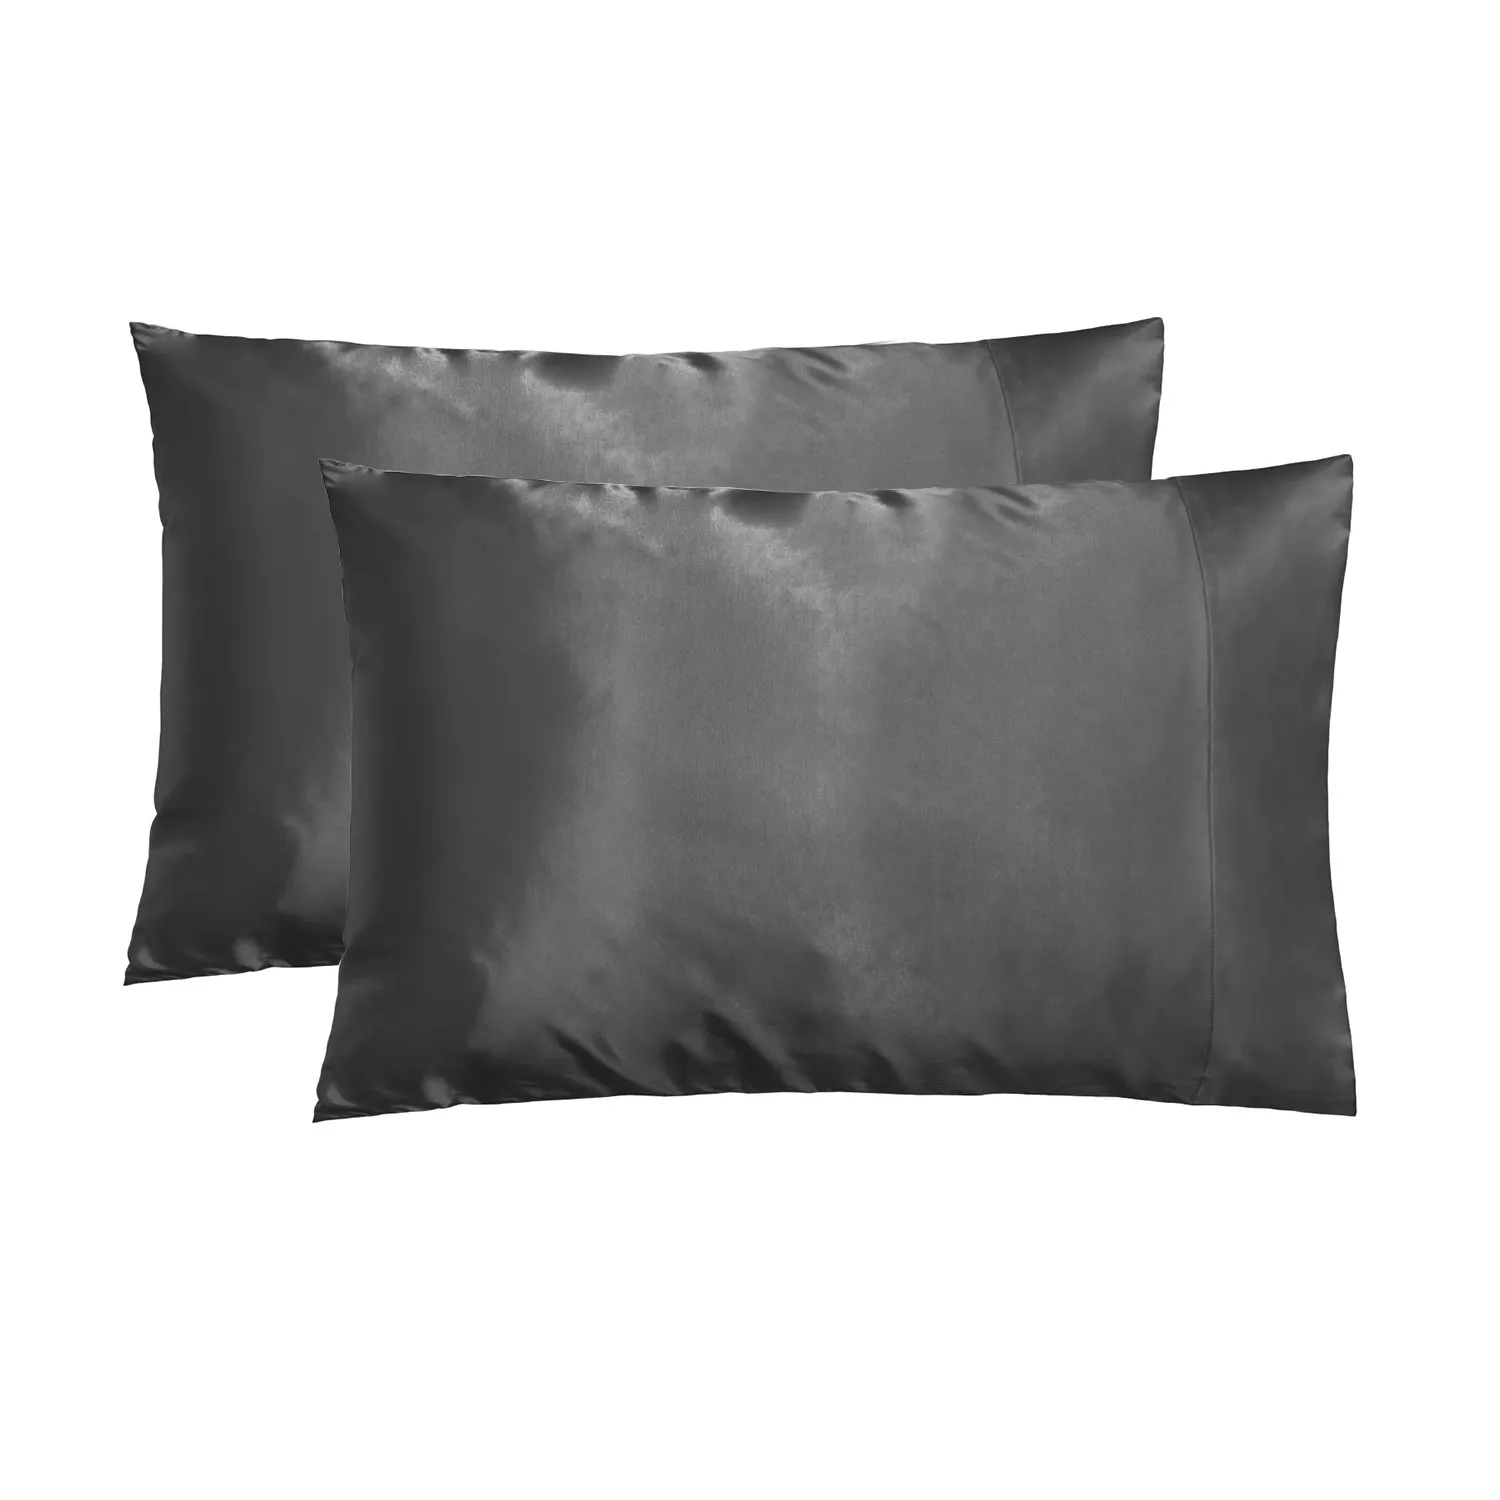 Luxury Satin Pillow Case - Super Soft Pillow Covers for Better Sleep & Hair (Pillowcase Set Of 2)